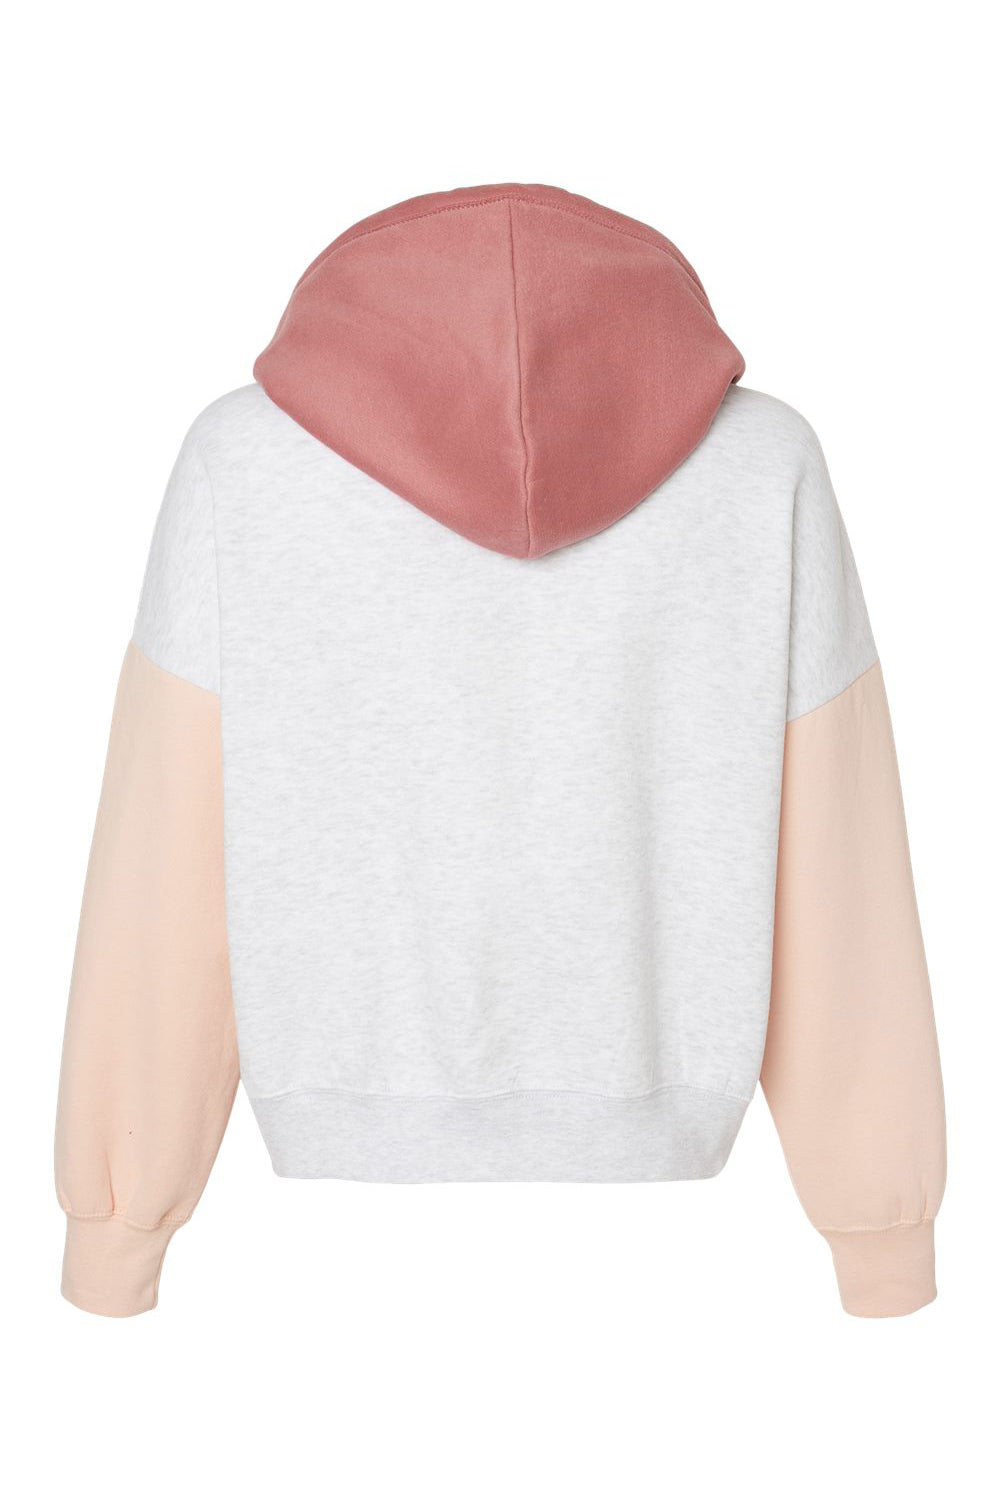 MV Sport W23716 Womens Sueded Fleece Colorblock Crop Hooded Sweatshirt Hoodie Cameo Pink Flat Back